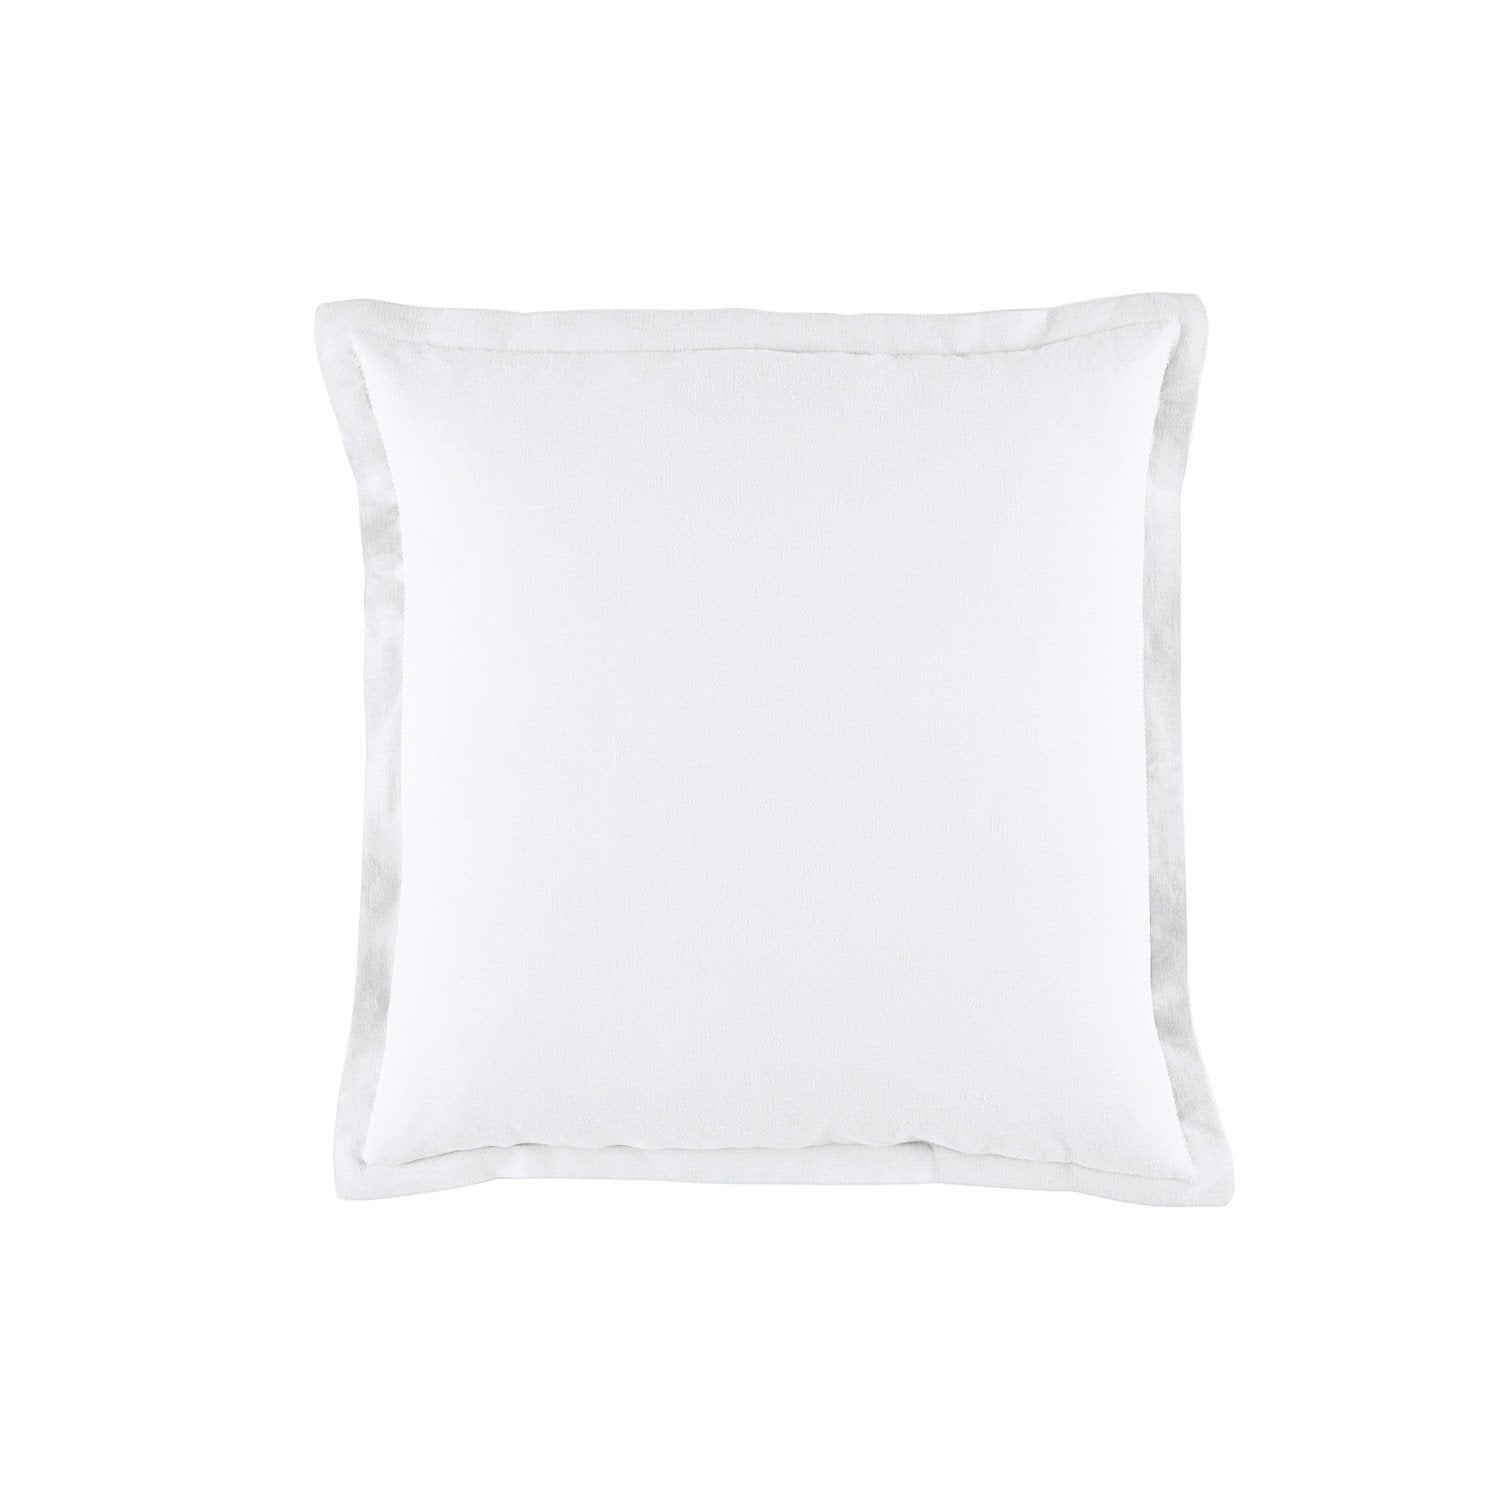 Wellington 43 x 43 cm Square Cushion White by Bianca